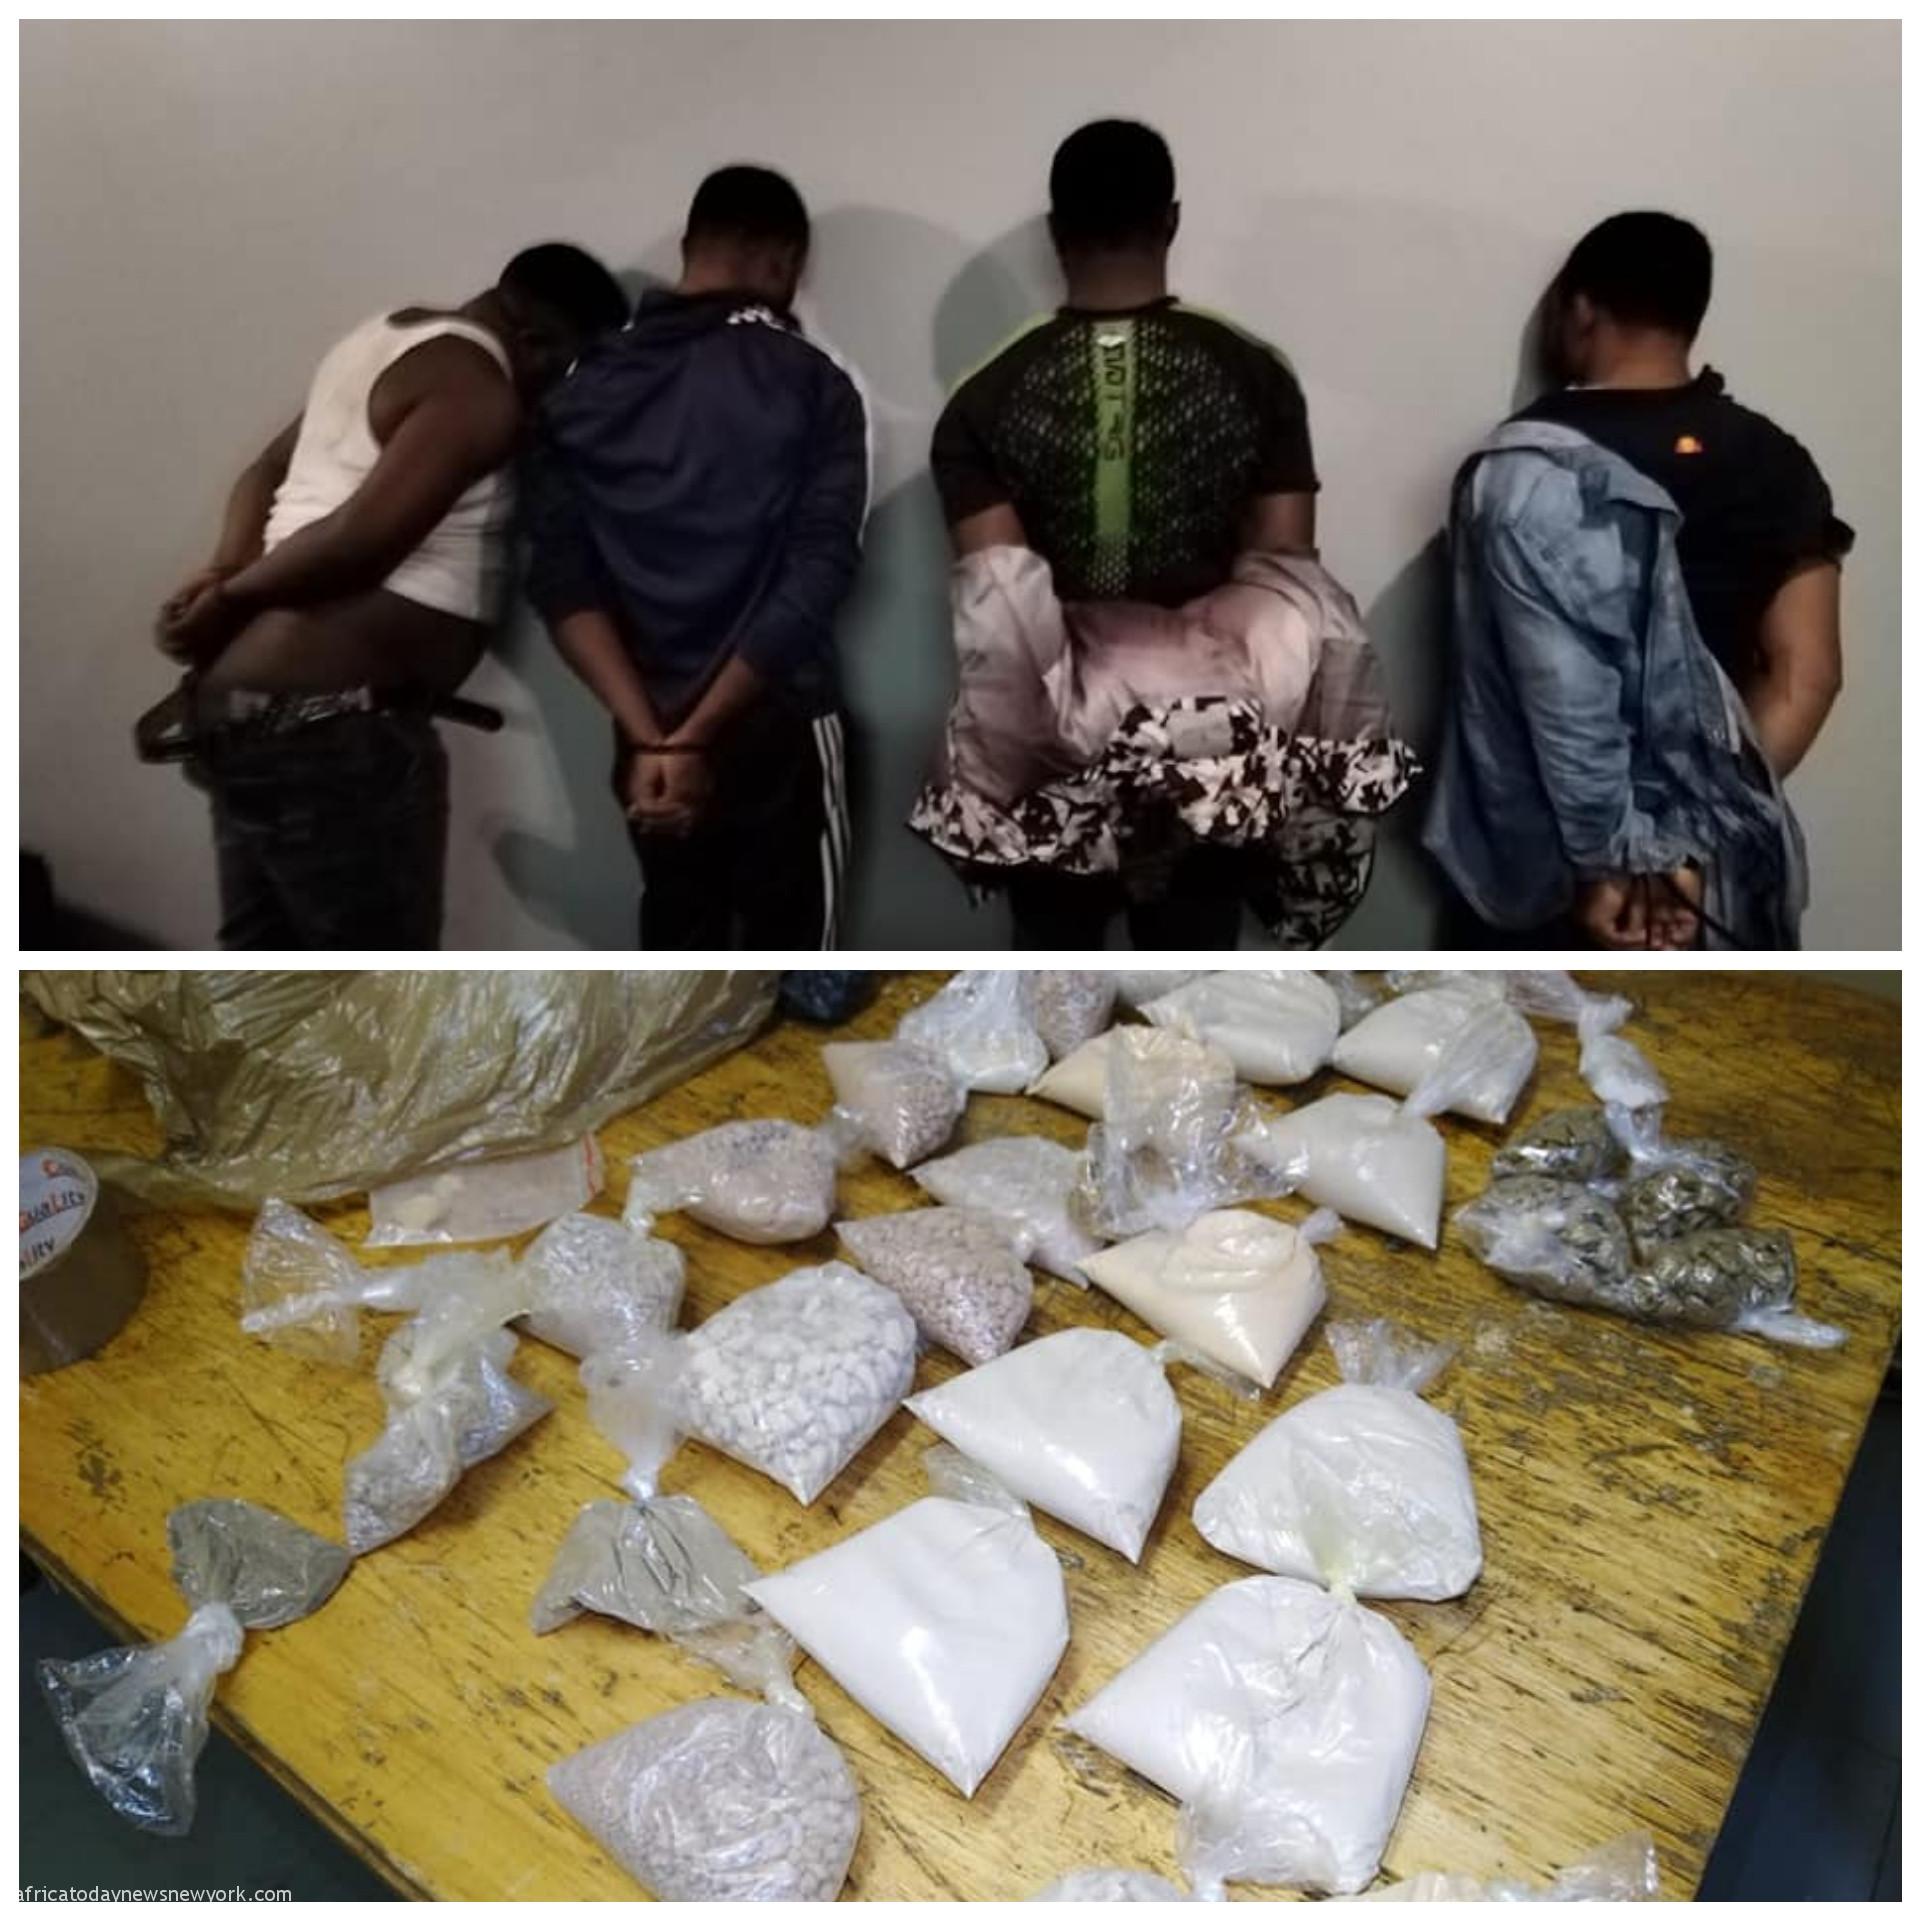 5 Nigerians Apprehended Over Drug Dealing In South Africa